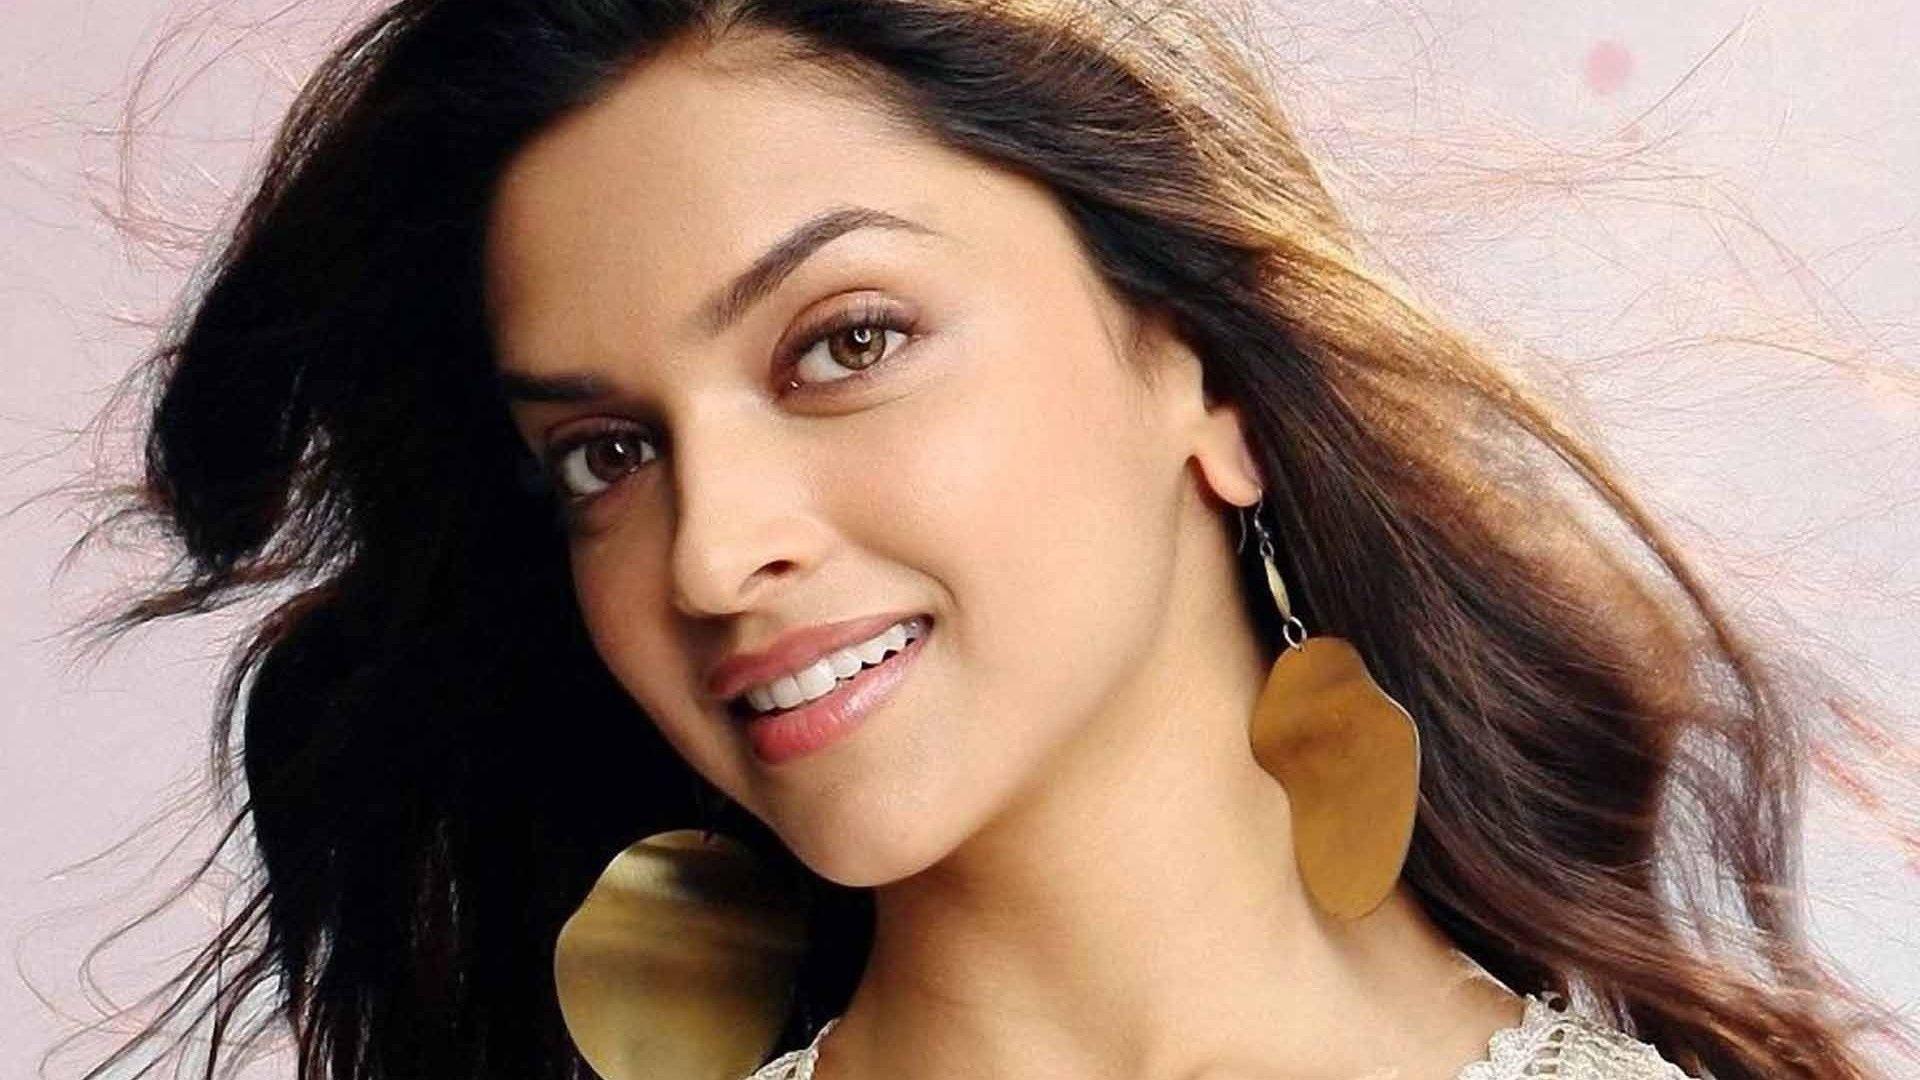 image For > Bollywood Wallpaper HD. actress. Actress